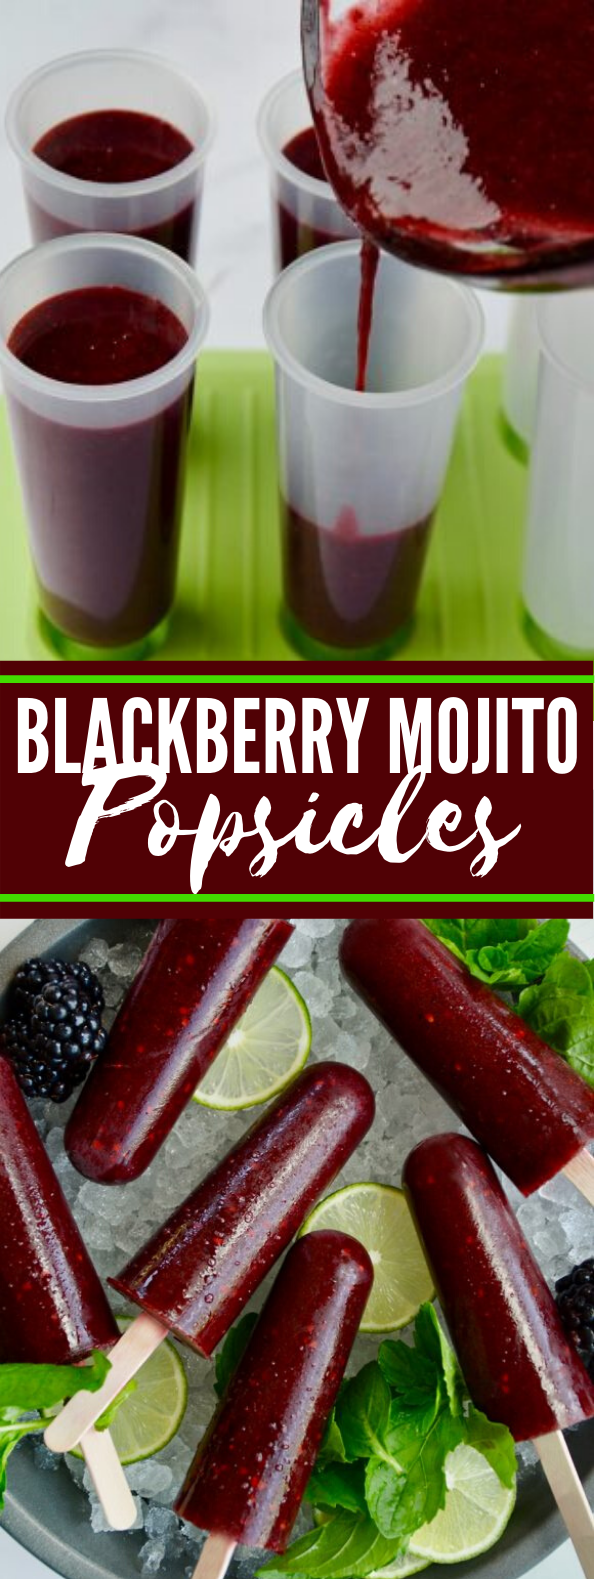 Blackberry Mojito Popsicles #desserts #cocktails